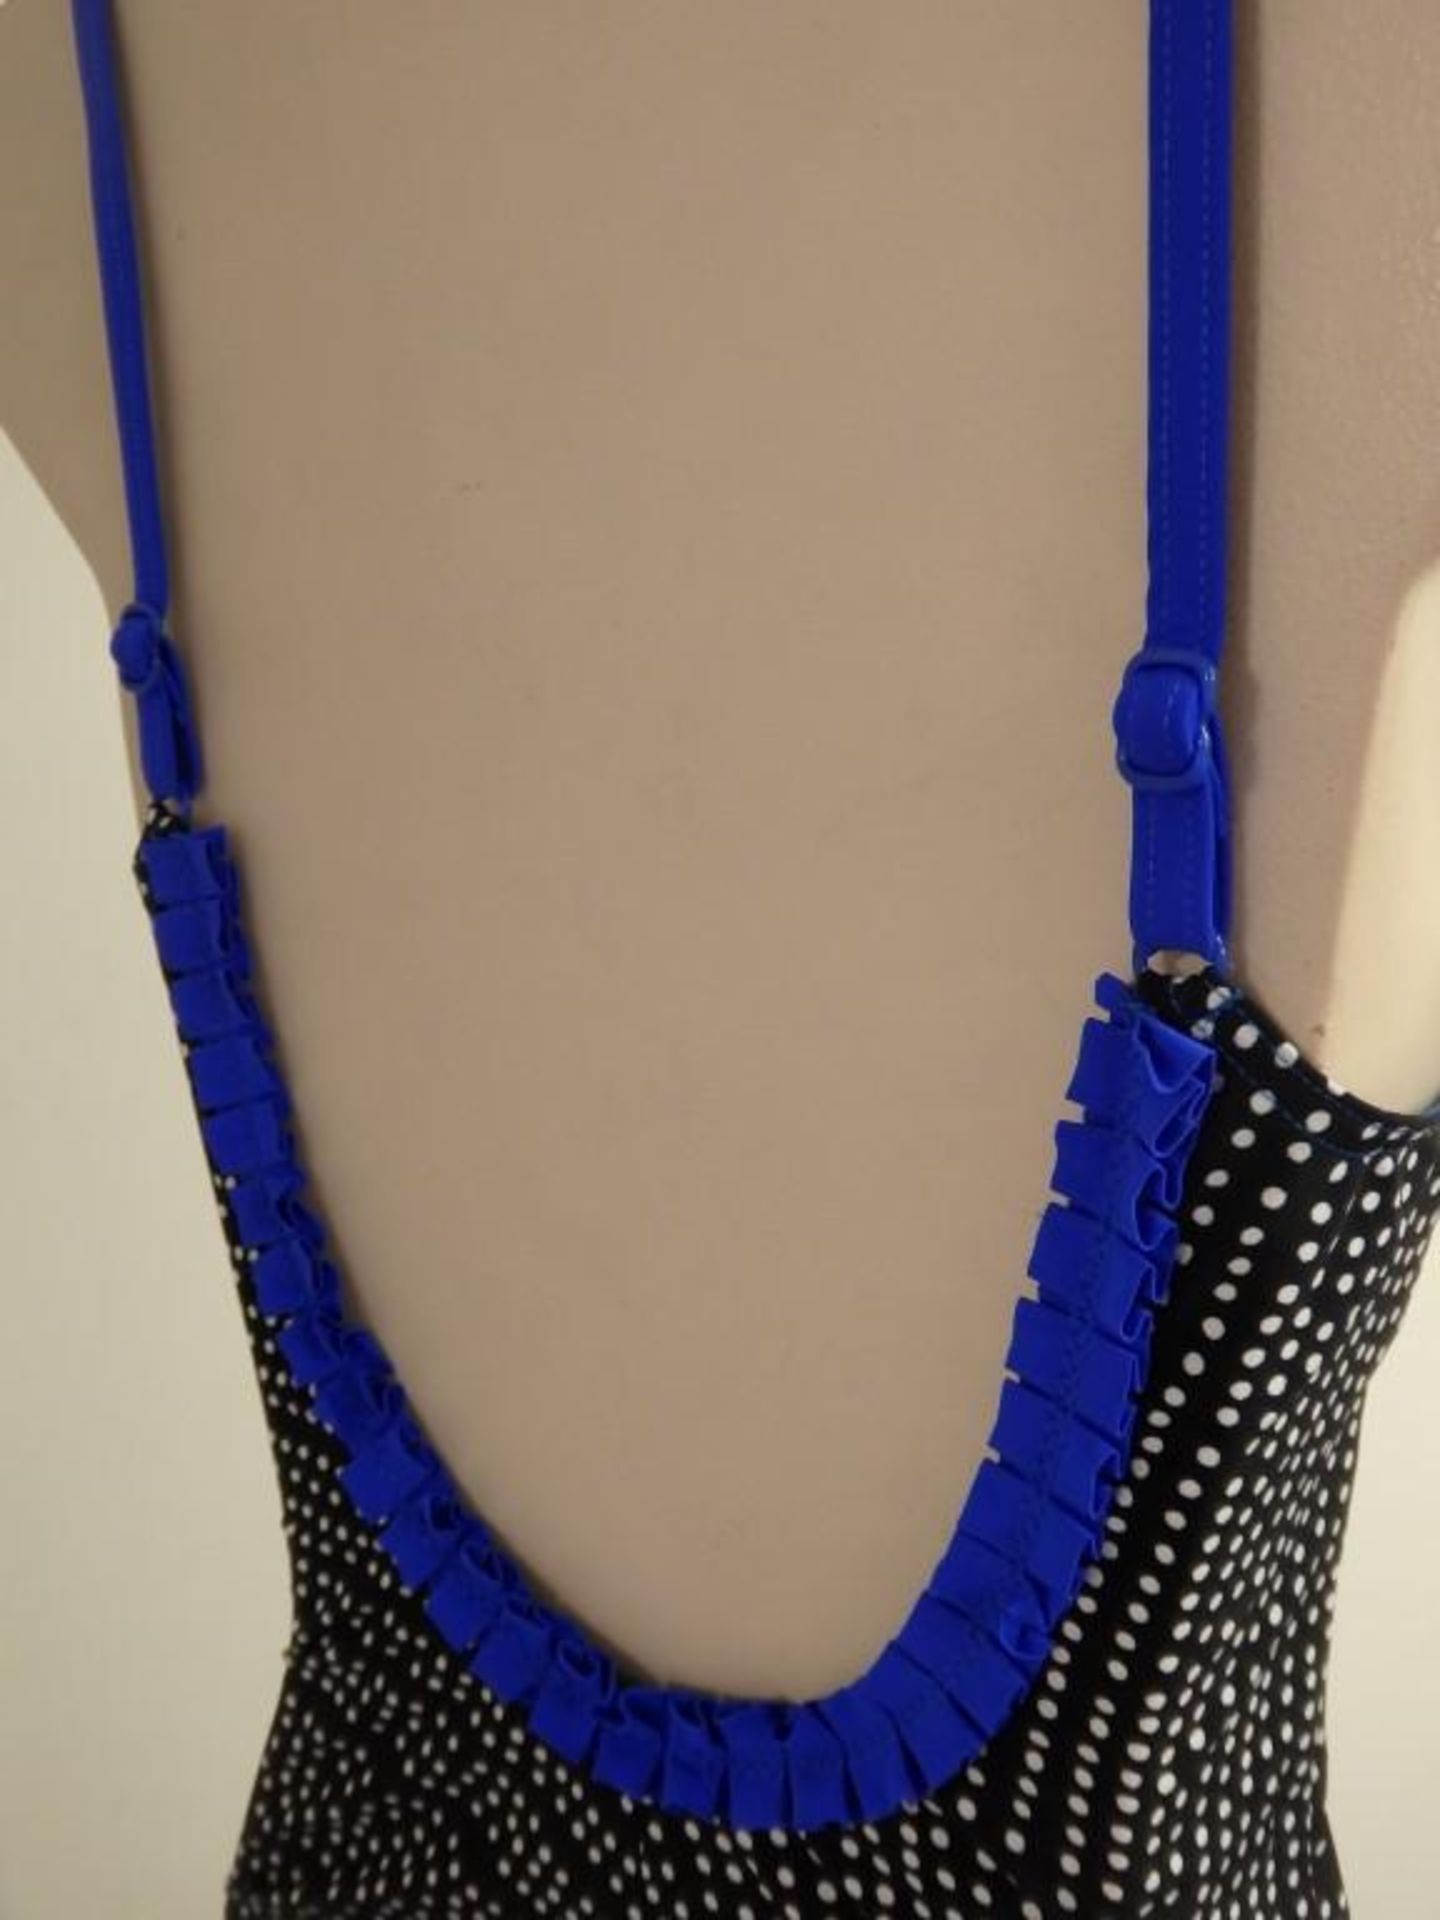 1 x Rasurel - Black Polka dot with royal blue trim & frill Tobago Swimsuit - B21039 - Size 2C - UK 3 - Image 6 of 8